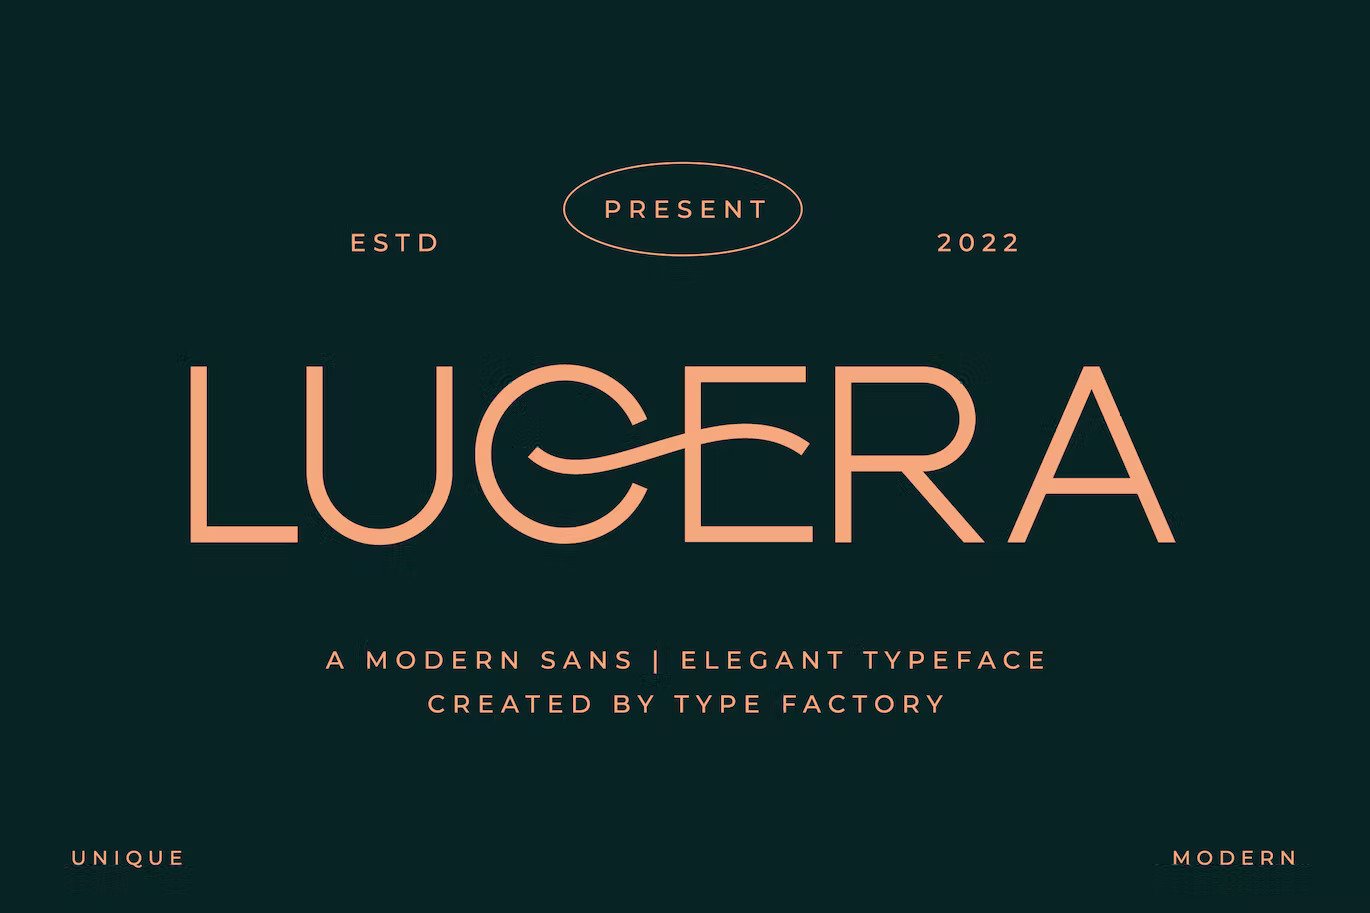 A modern and elegant sans typeface